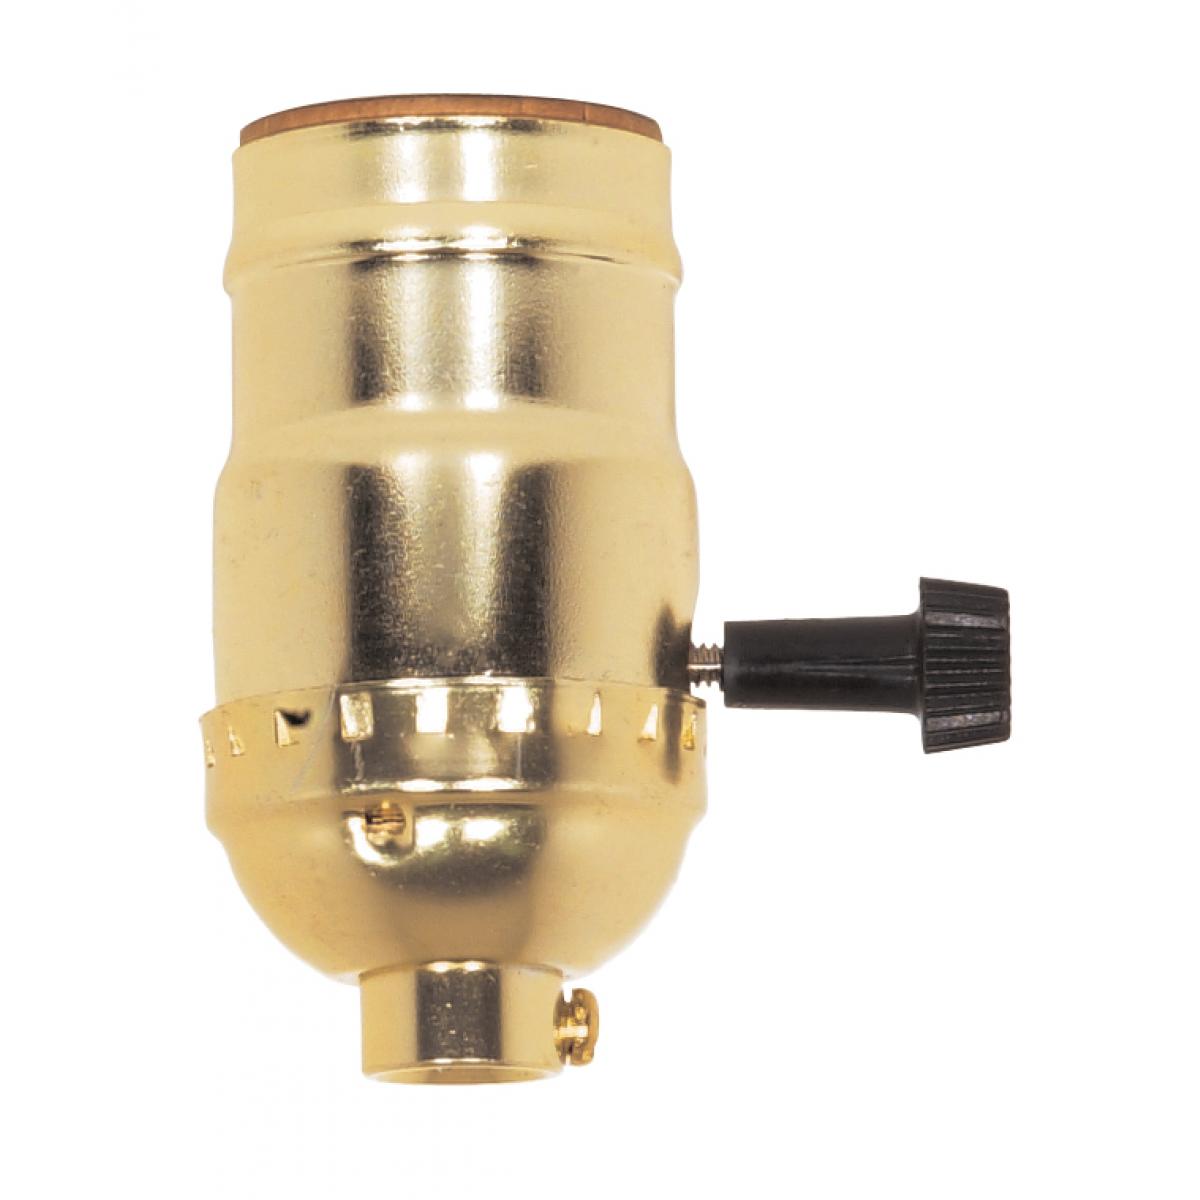 Satco 80-1016 Hi-Low Turn Knob Socket For Standard A Type Household Bulb 6/32 Mandrel 1/8 IPS Aluminum Brite Gilt Finish 250W 250V